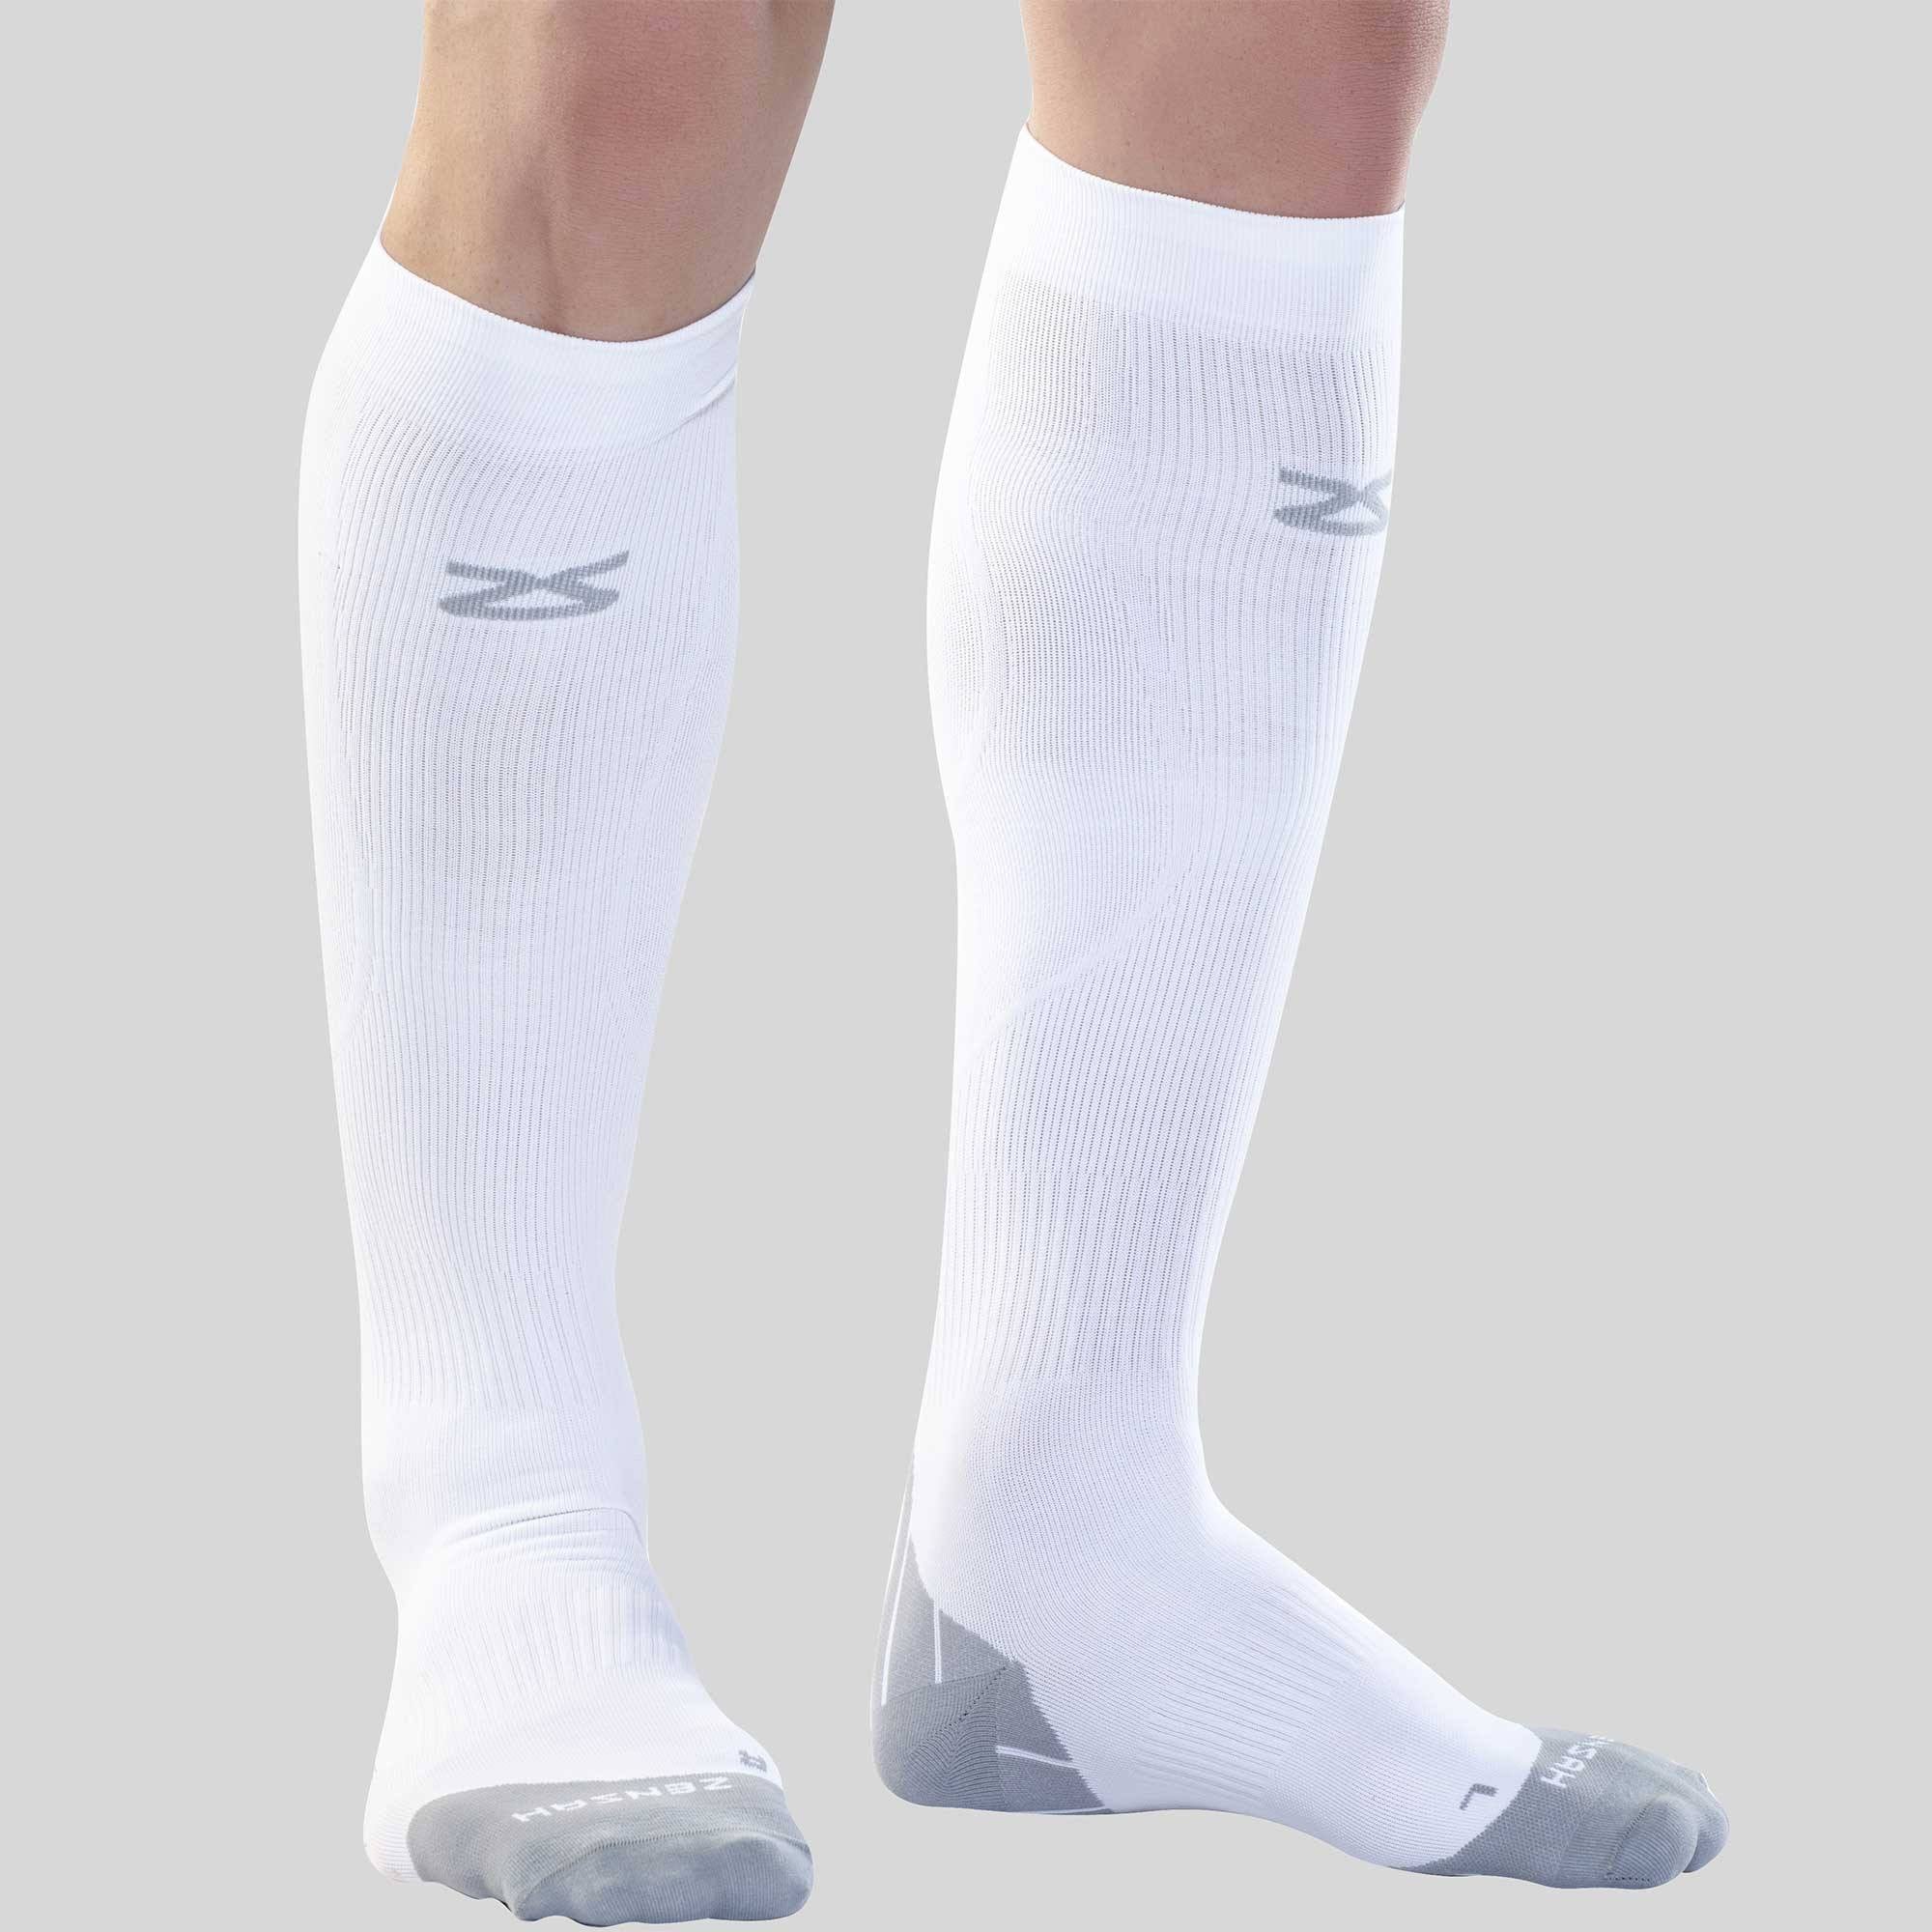 white compression socks running